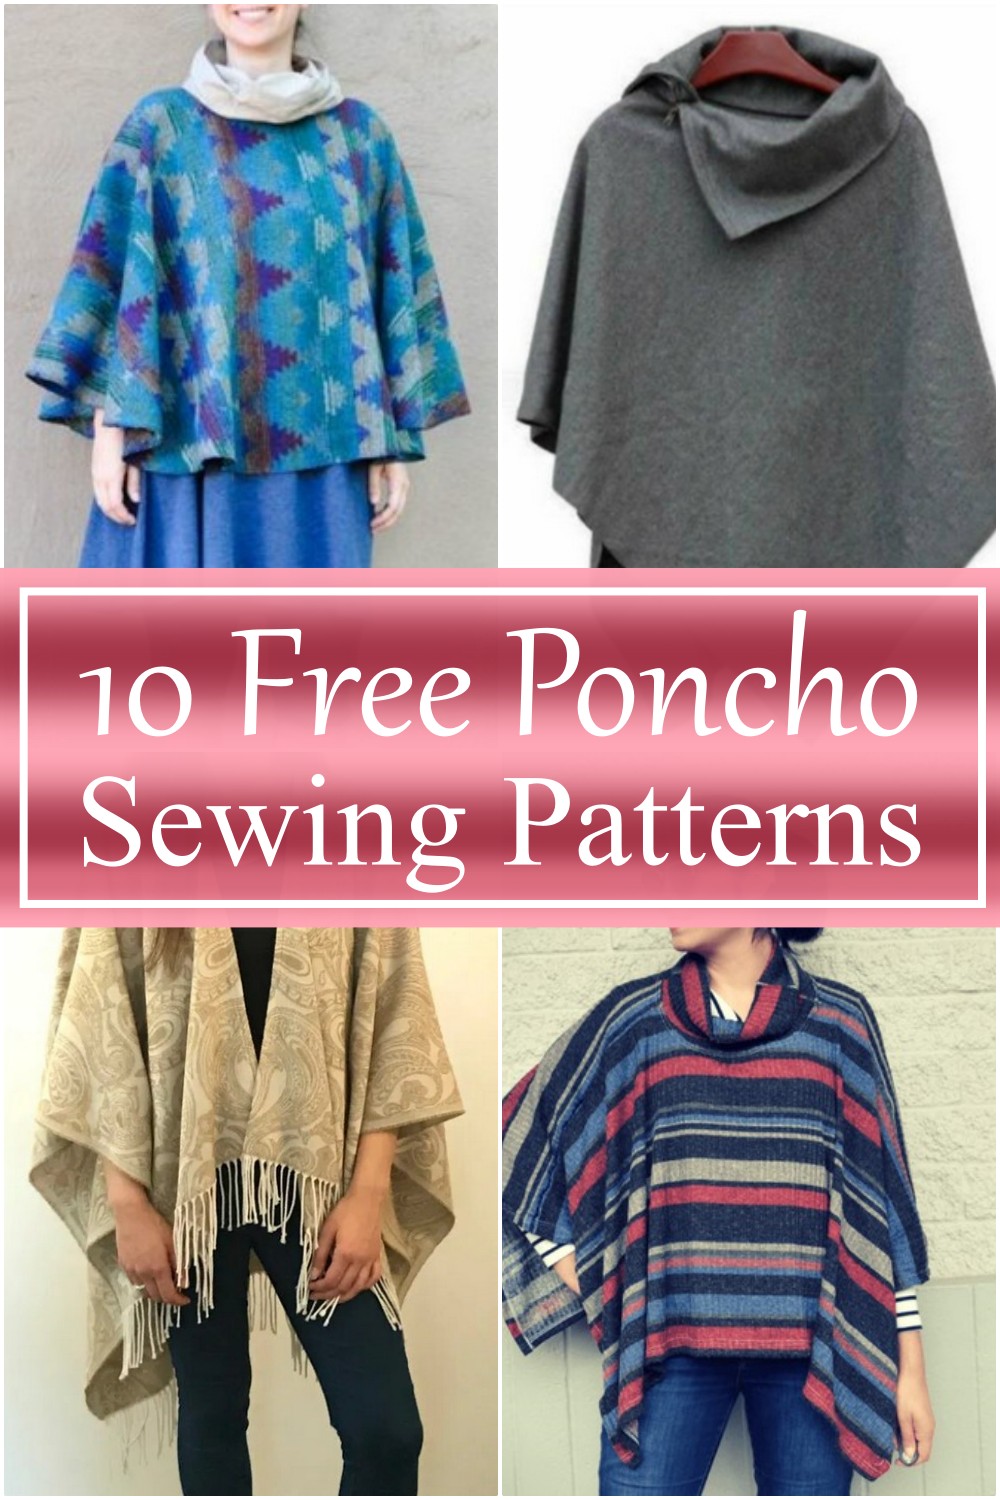 Free Poncho Sewing Patterns